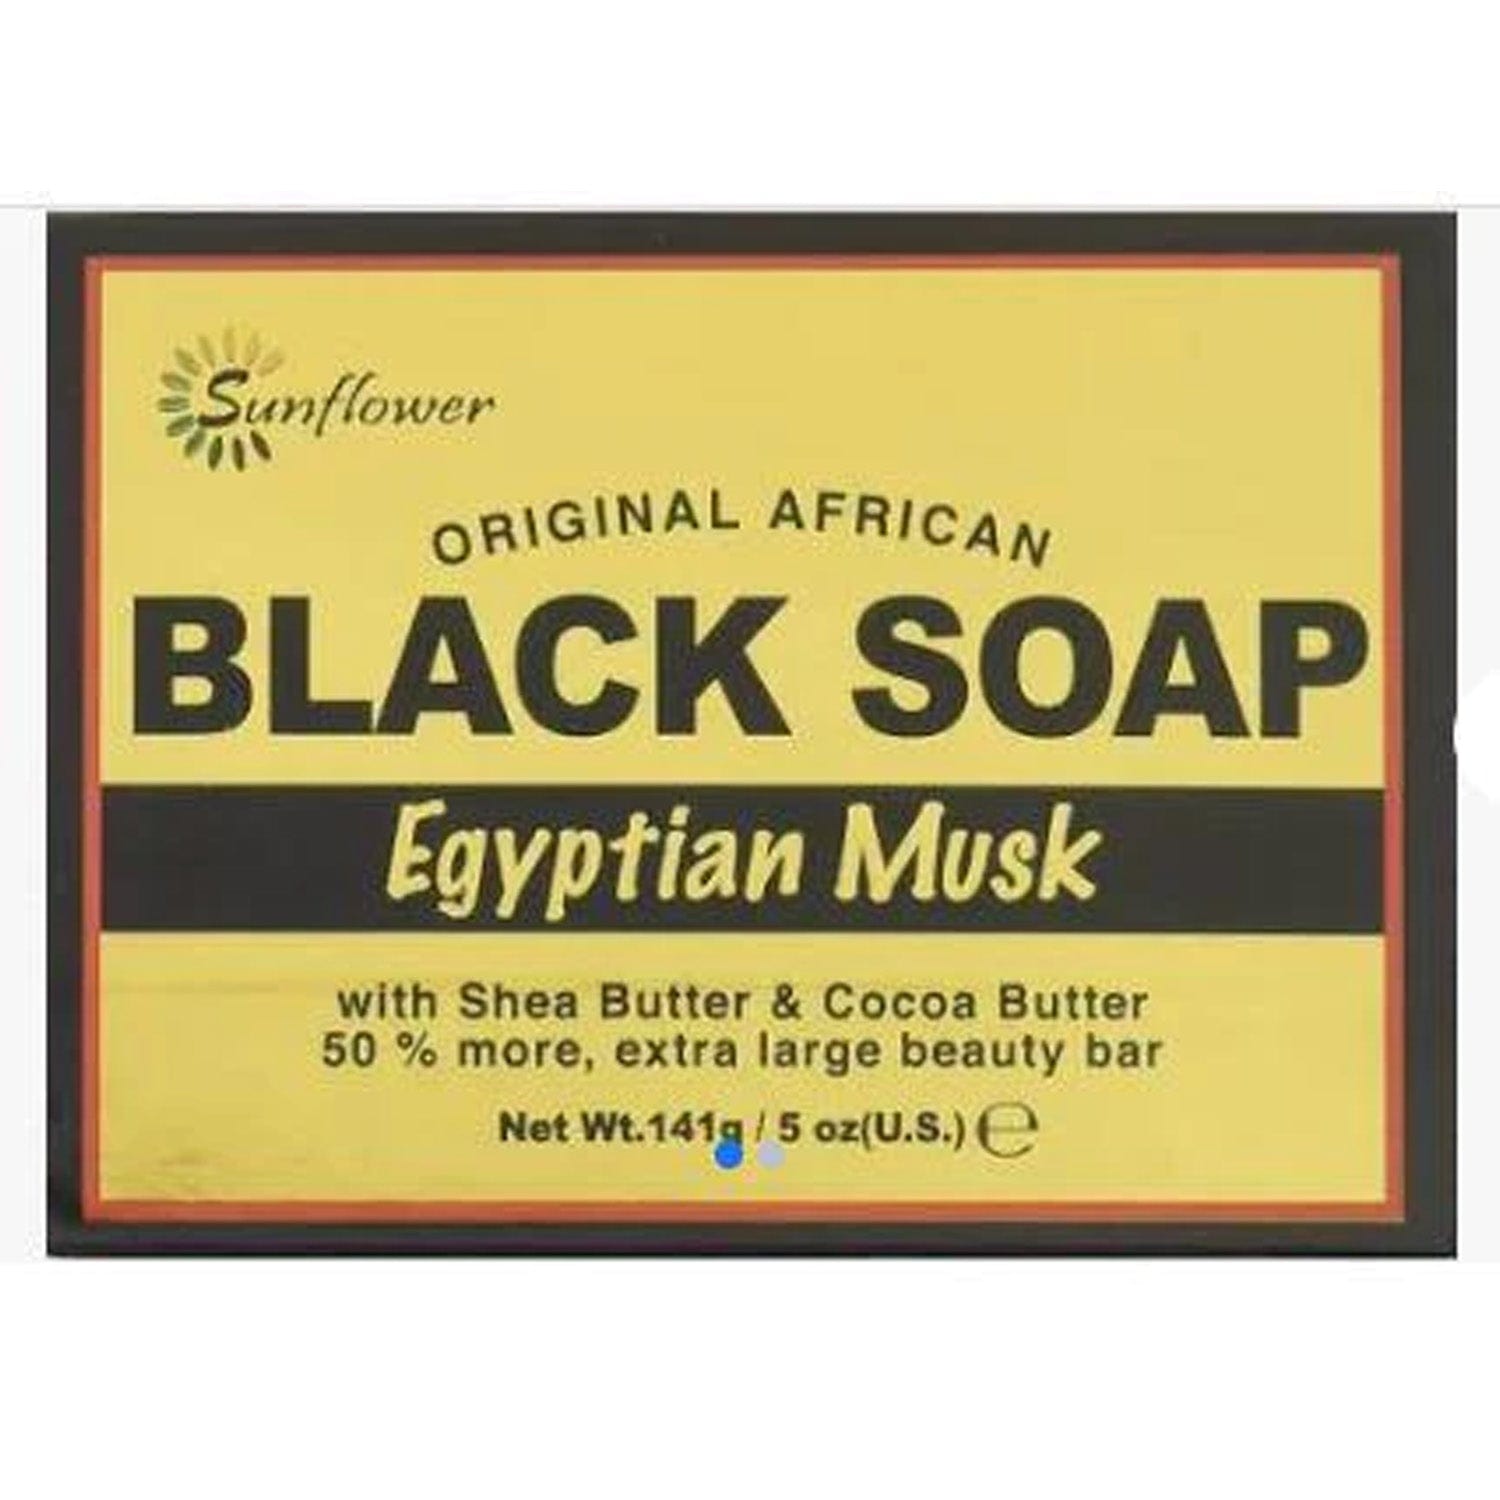 ORIGINAL AFRICAN BLACK SOAP EGYPTIAN MUSK  5oz.